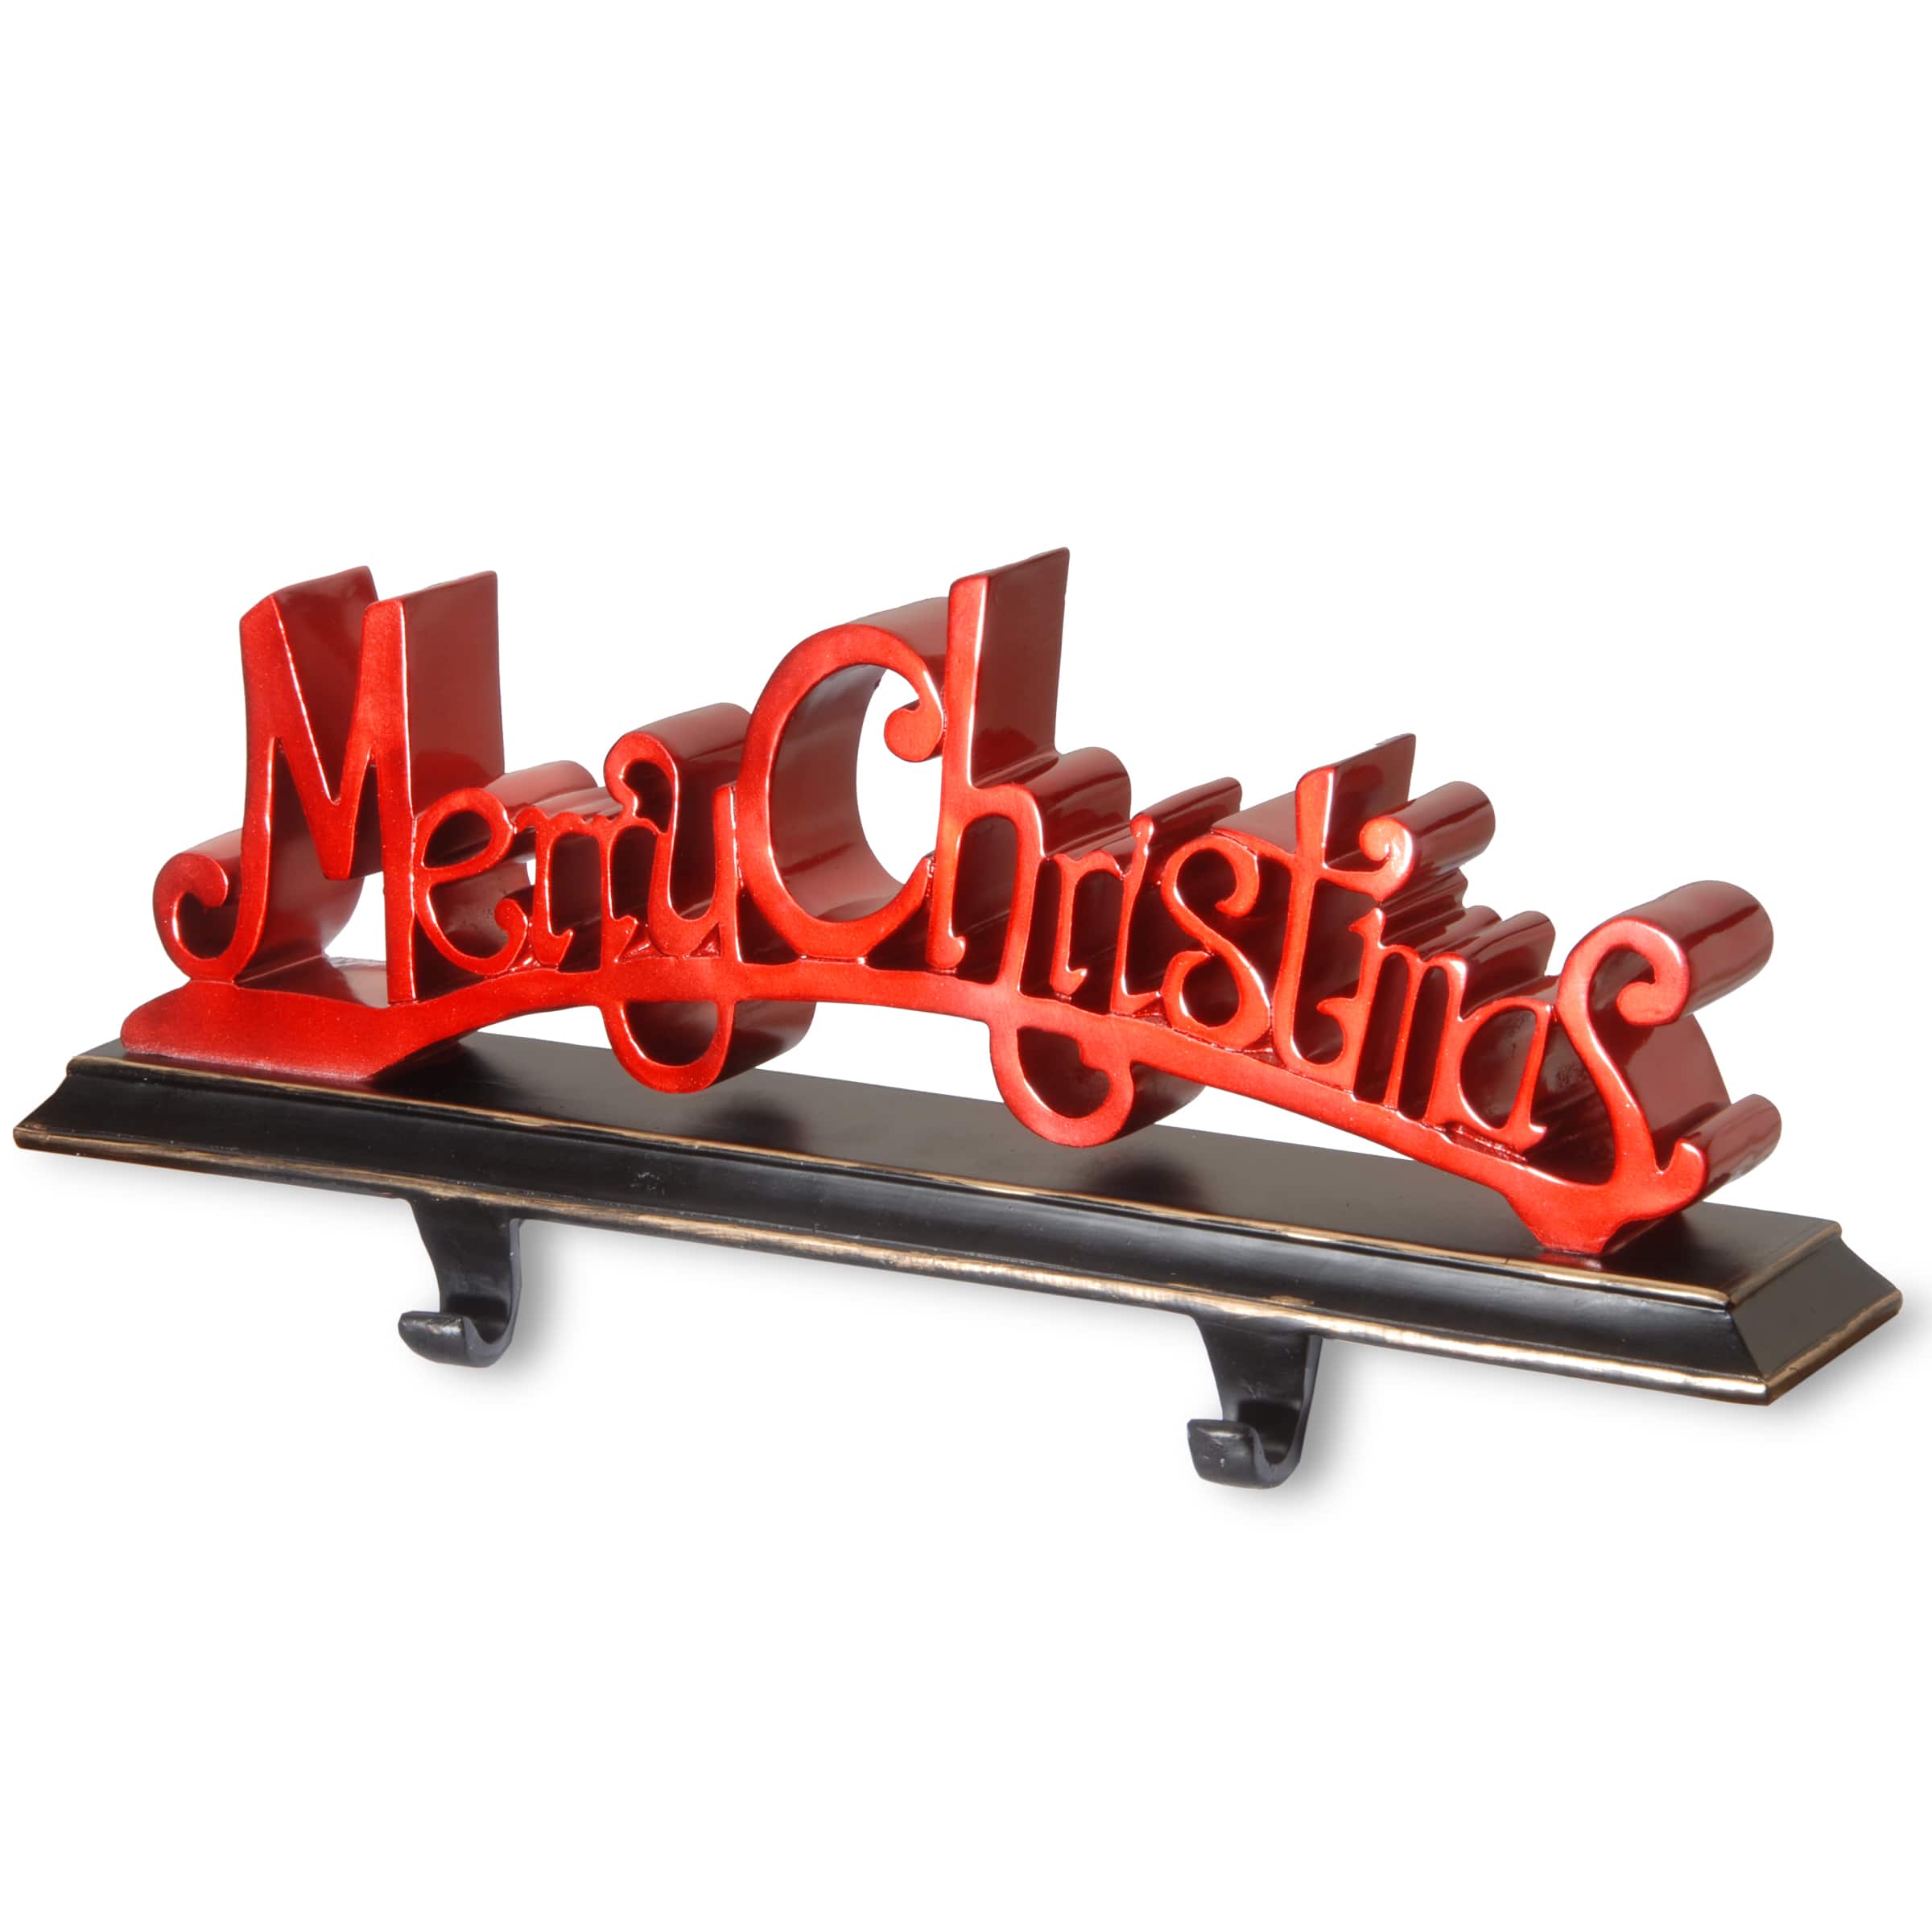 Christmas Stocking Holder Hanger Brushed Silver Metal Blank Base Holiday 